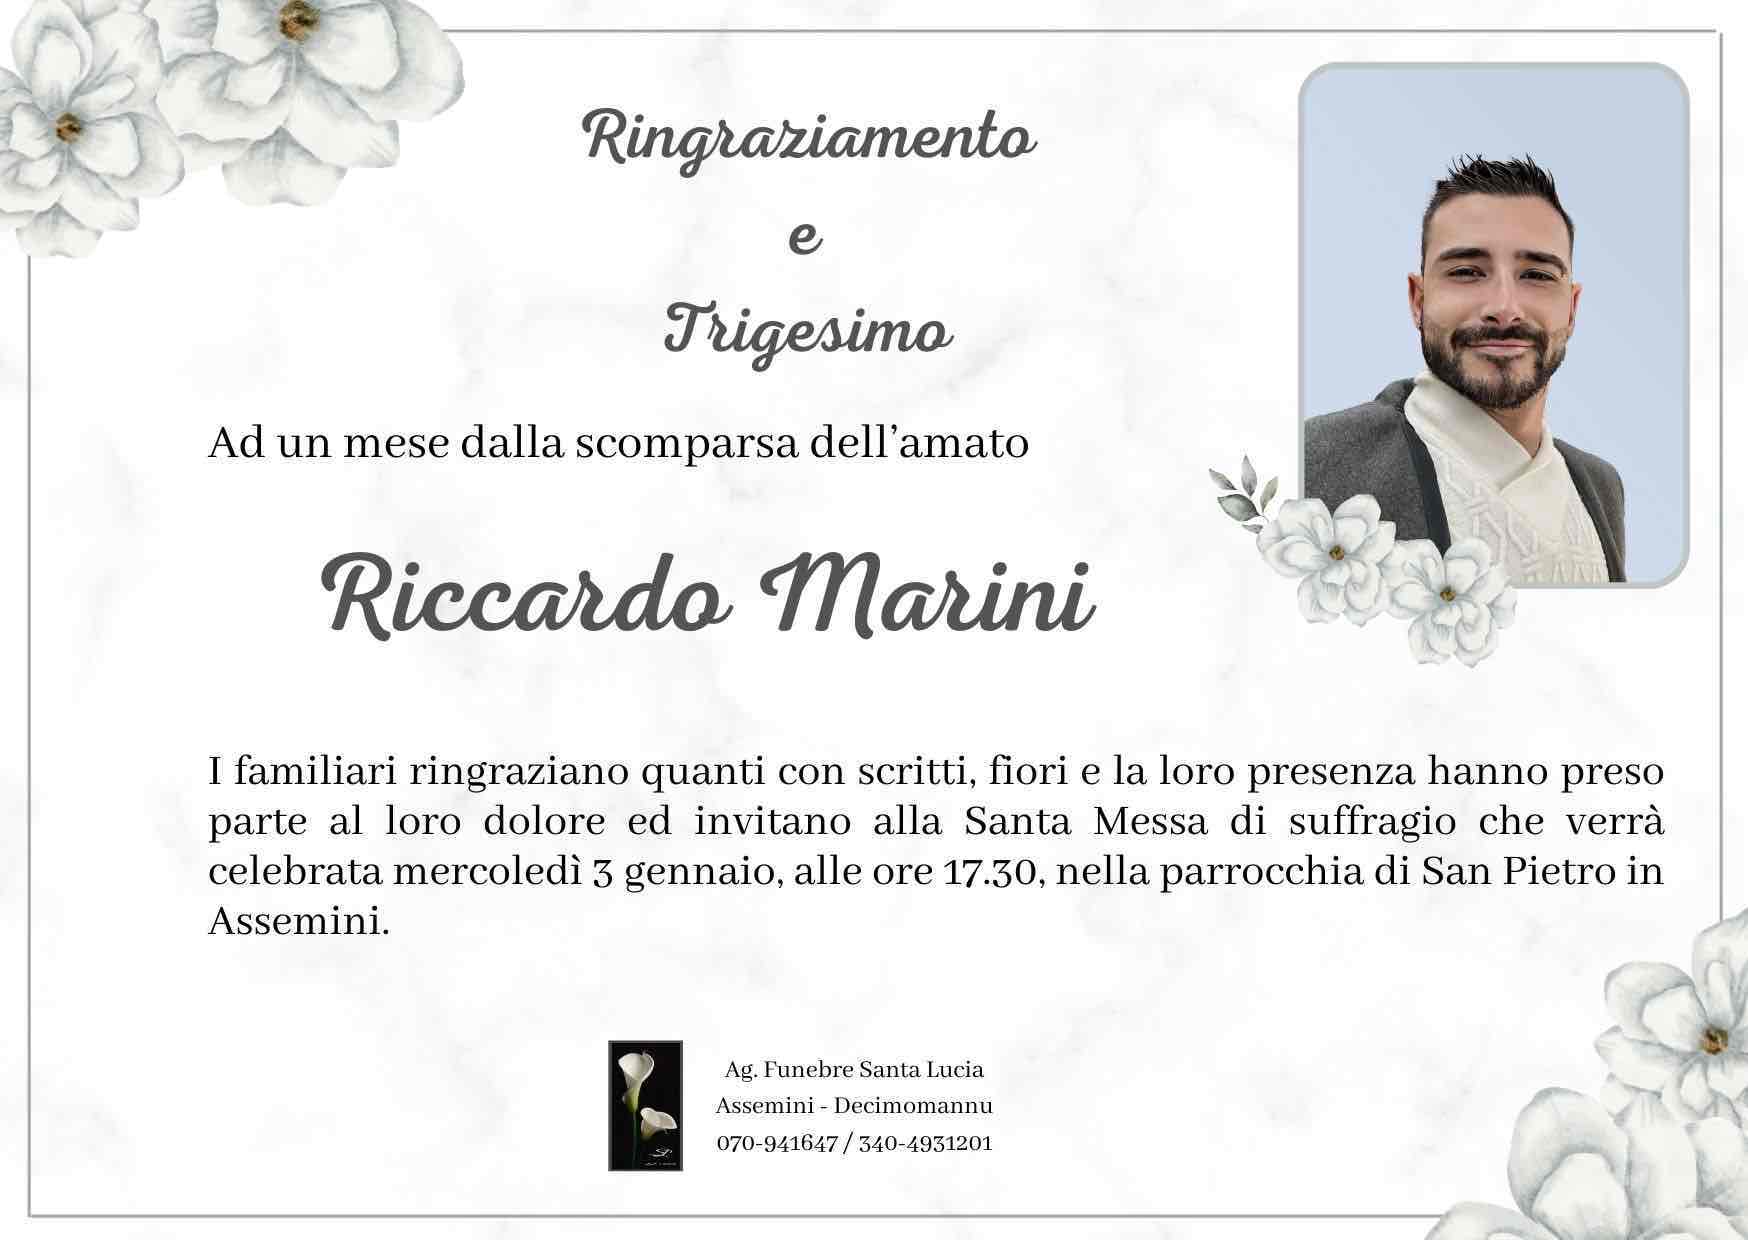 Riccardo Marini